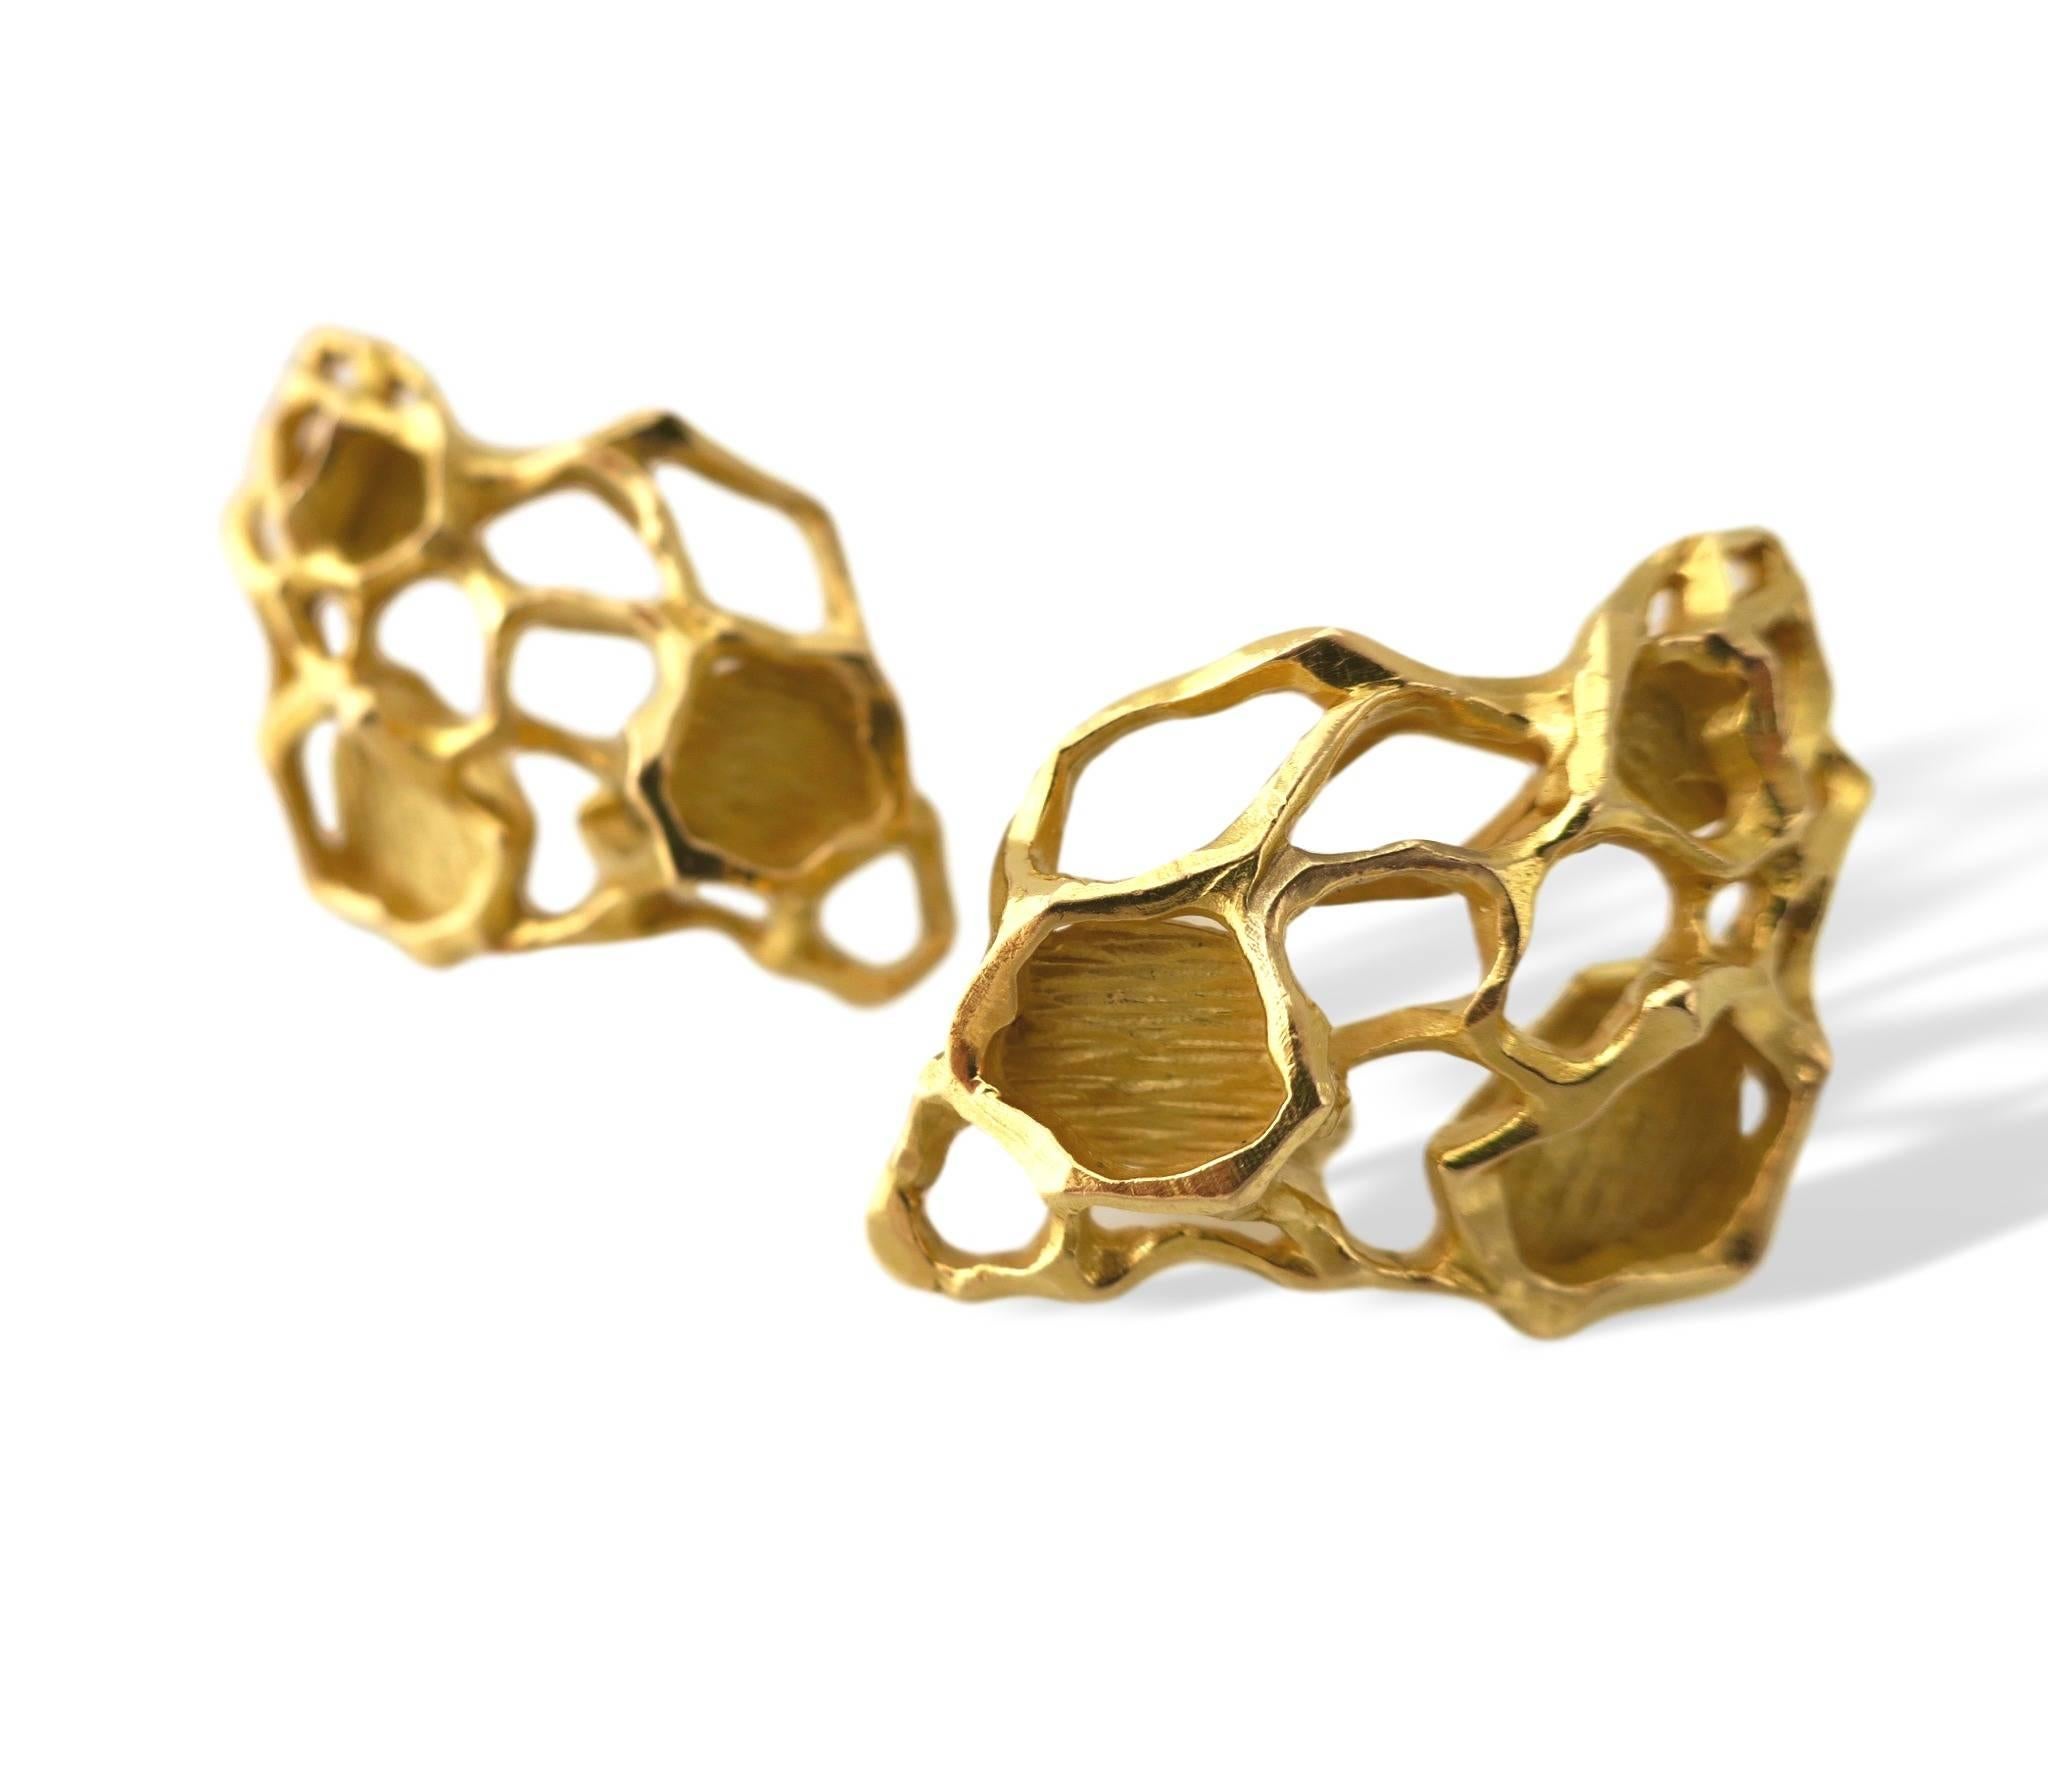 Gold Earclips by Swiss Designer Gubelin. The 18k 1 3/8